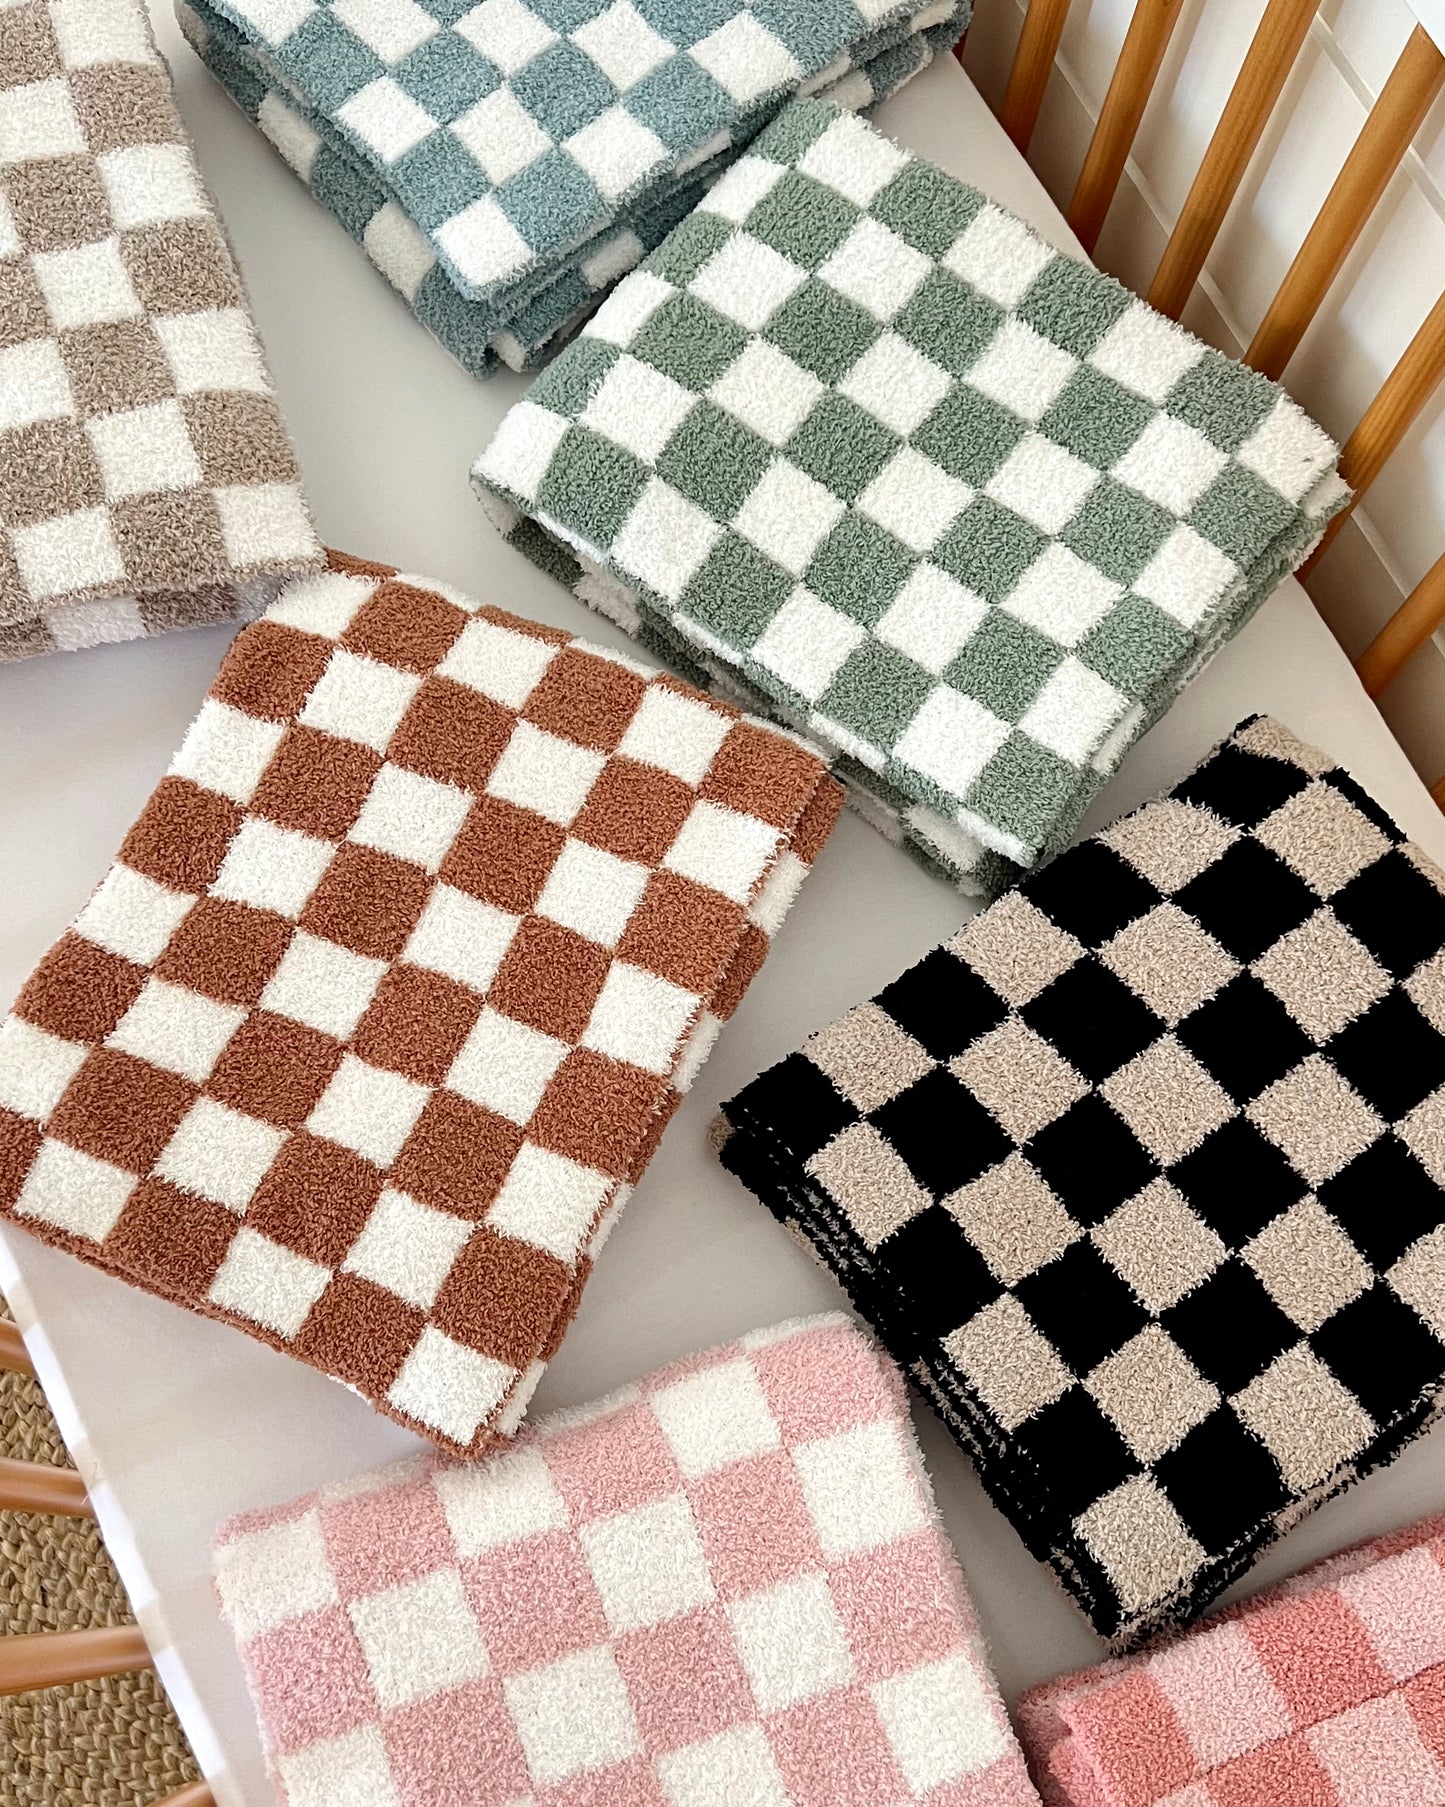 Phufy® Bliss Checkerboard Blanket, Powder